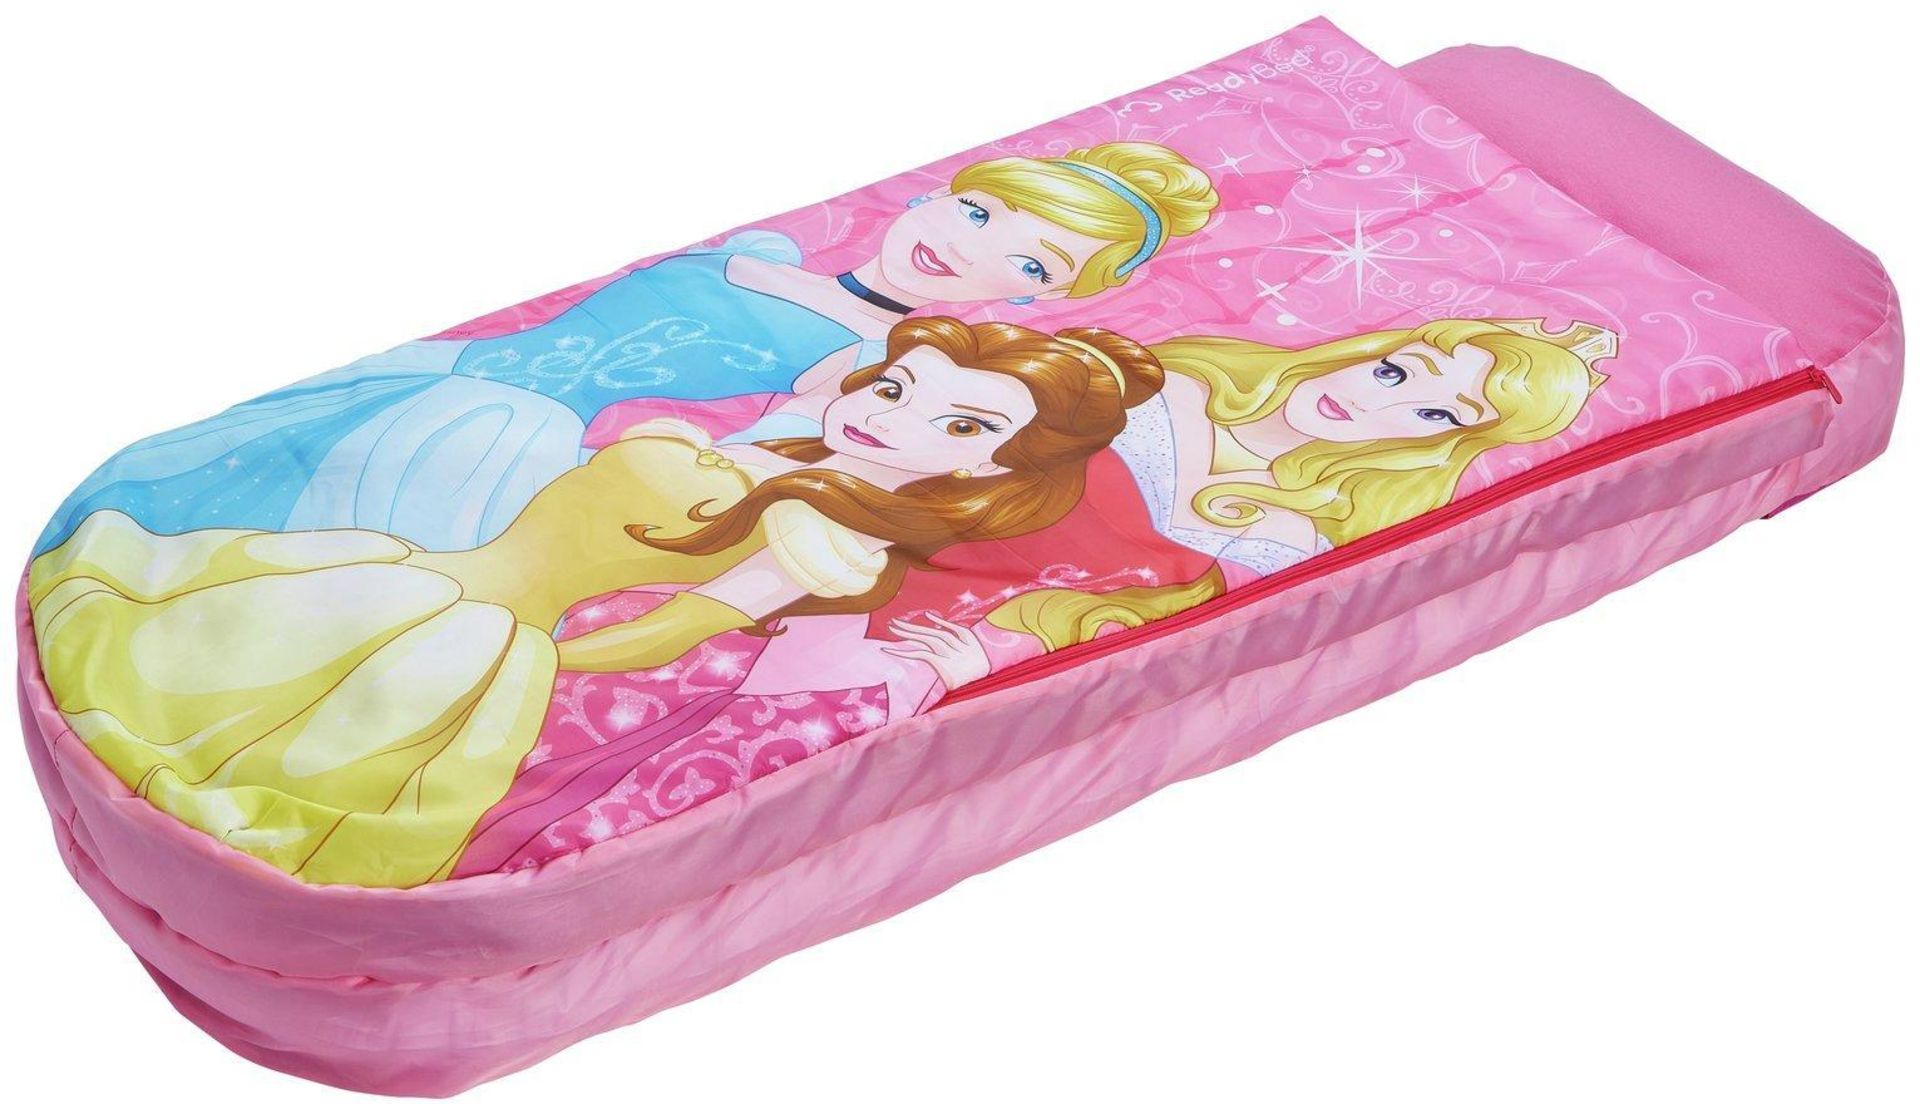 Disney Princess Junior ReadyBed Air Bed and Sleeping Bag, £30.00 RRP